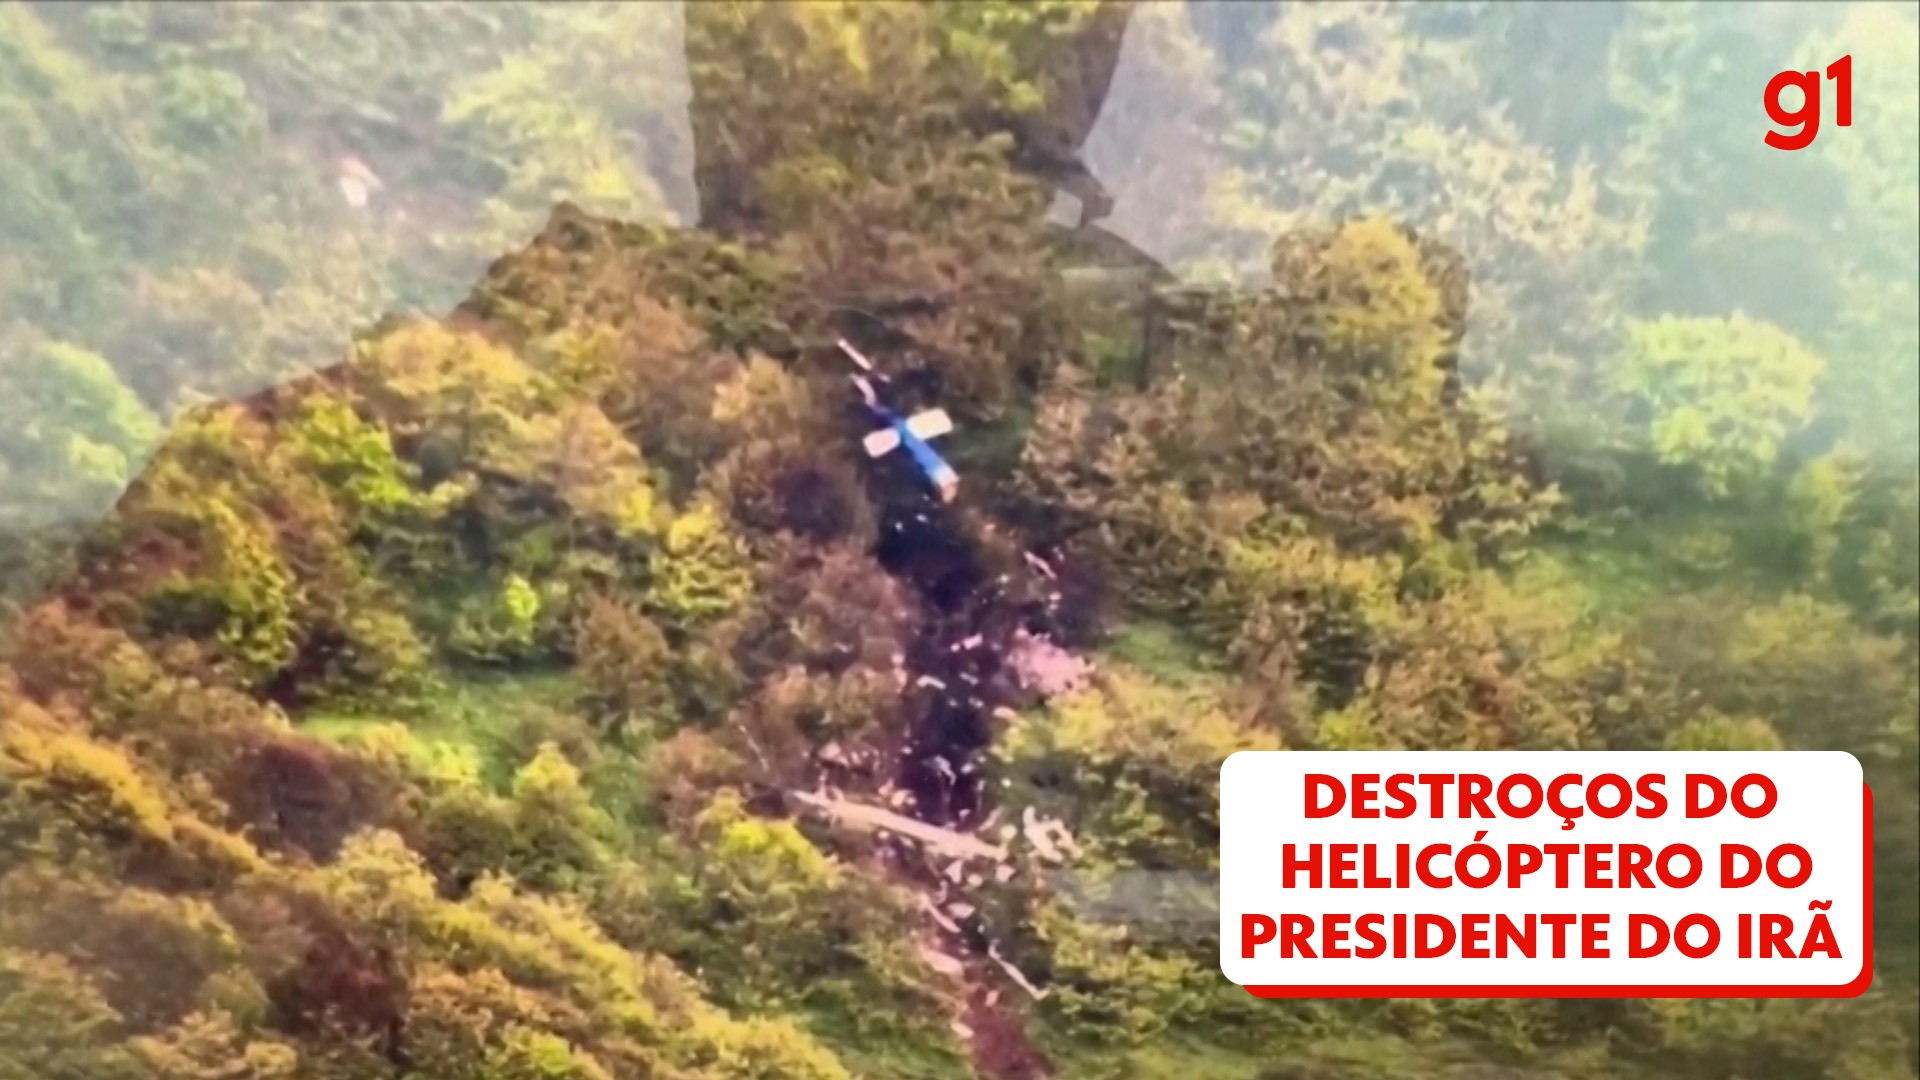 VÍDEOS: Helicóptero com o presidente do Irã sofre acidente